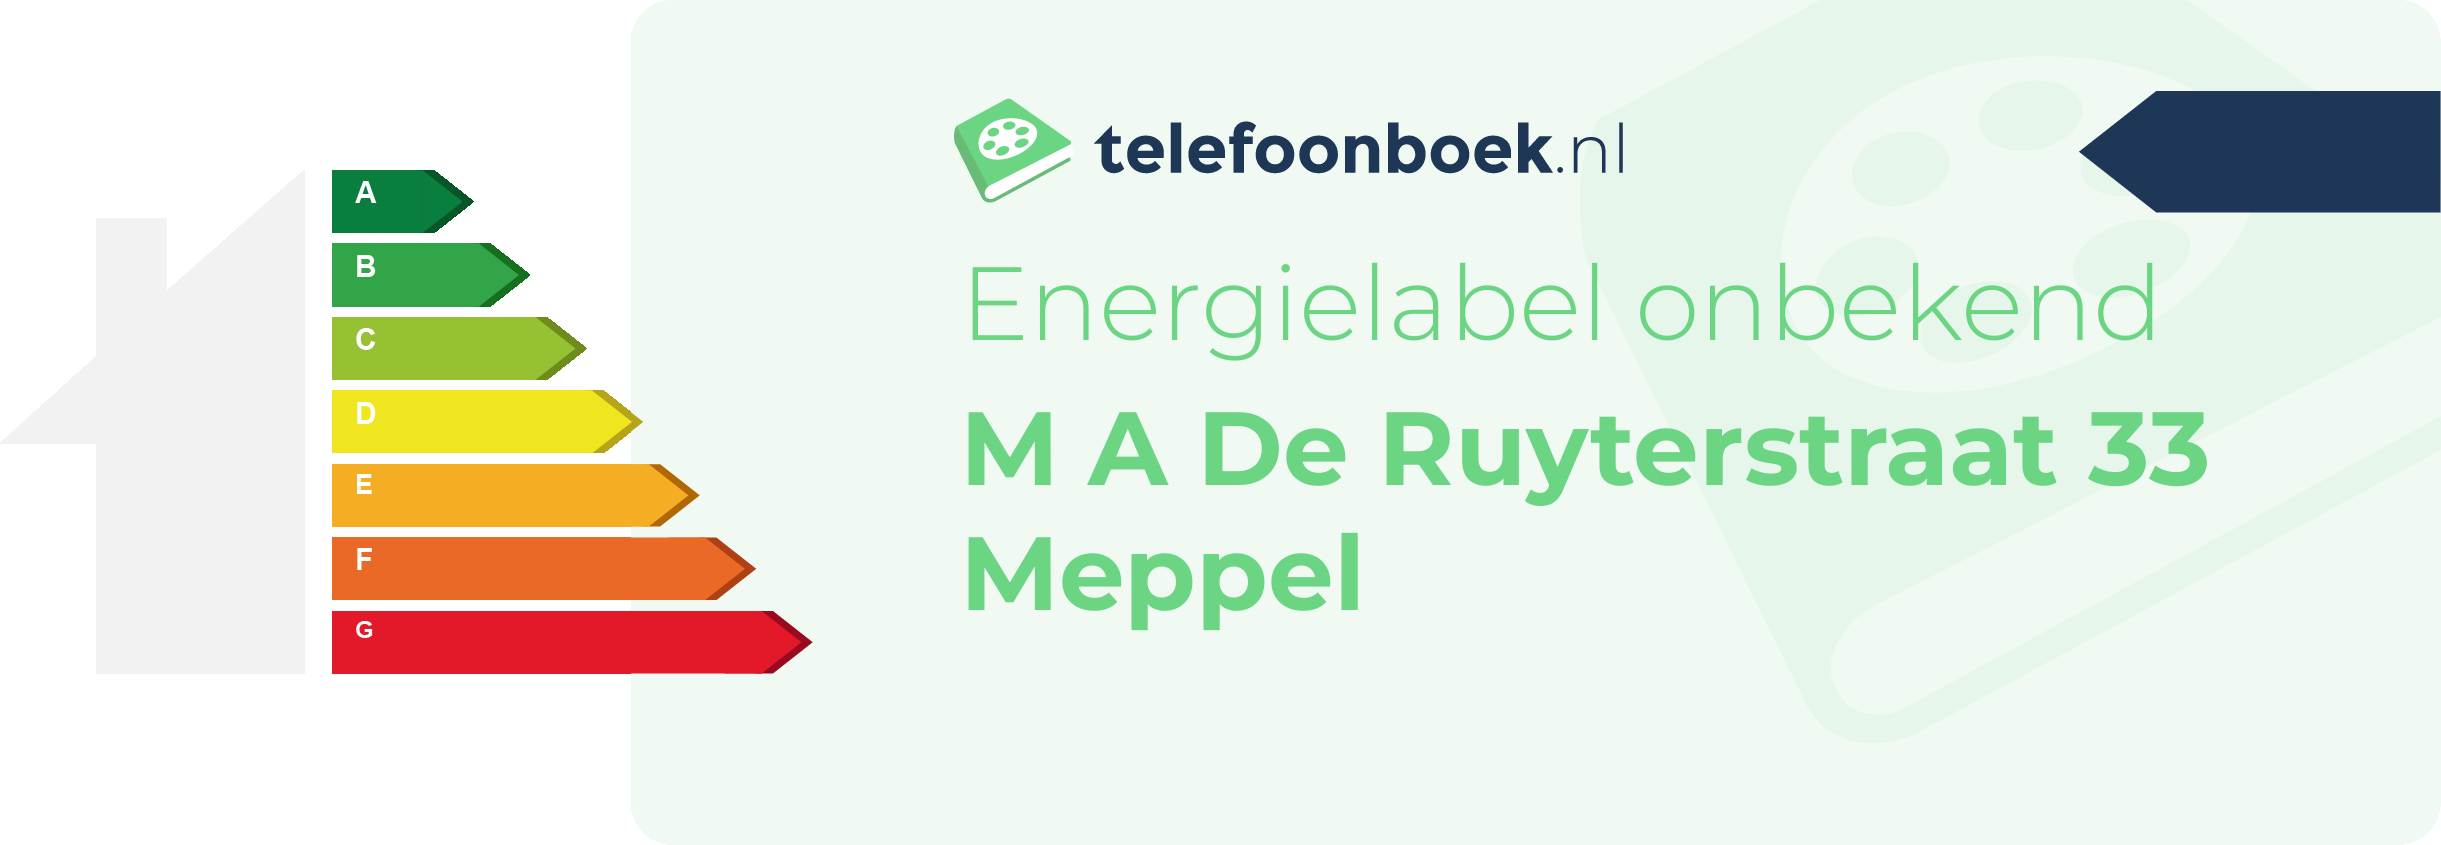 Energielabel M A De Ruyterstraat 33 Meppel